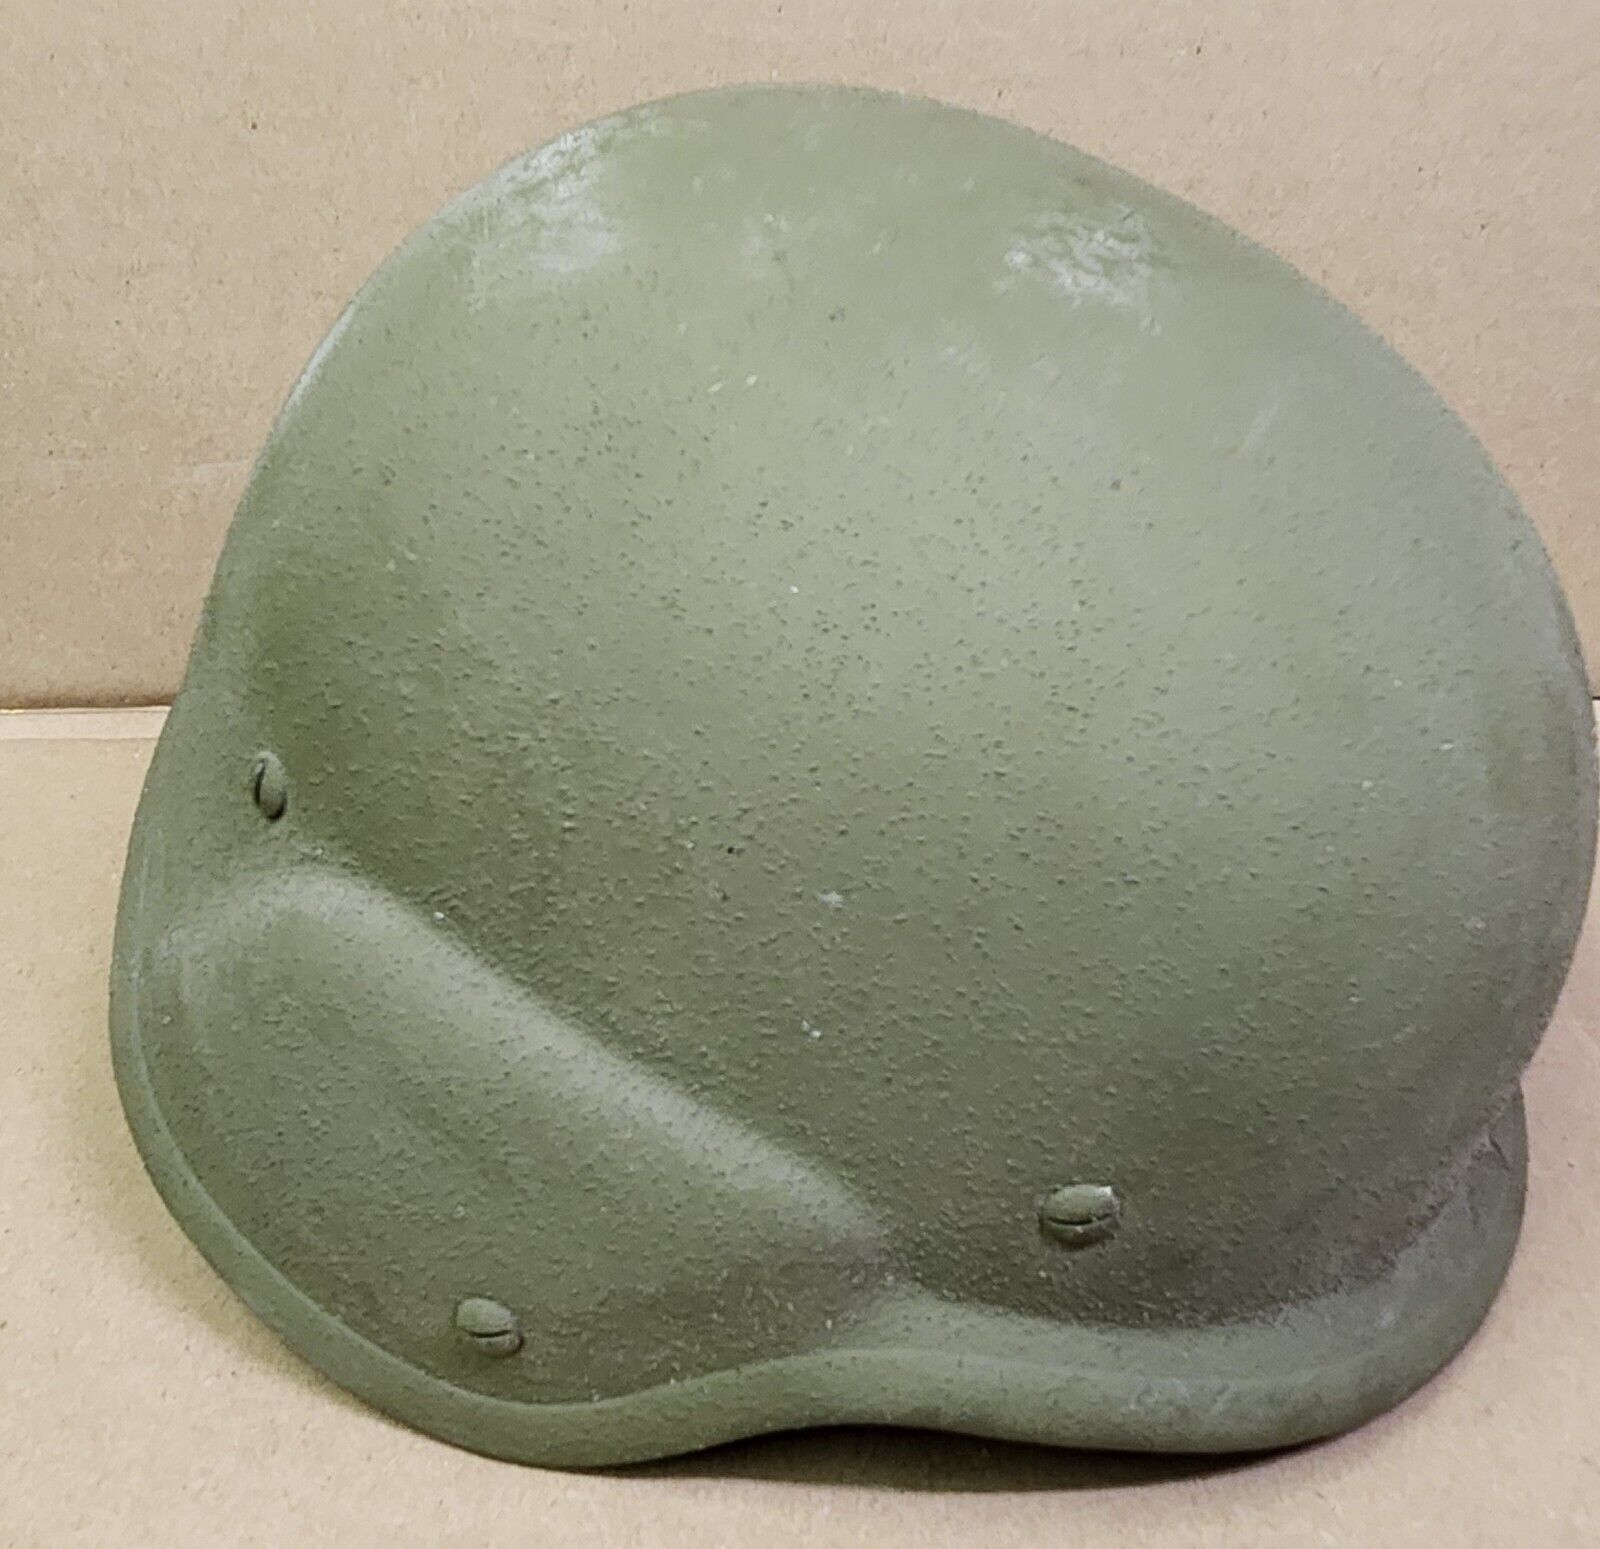 US Army PASGT Green Military Helmet DLA100-89-C-4035 S-4